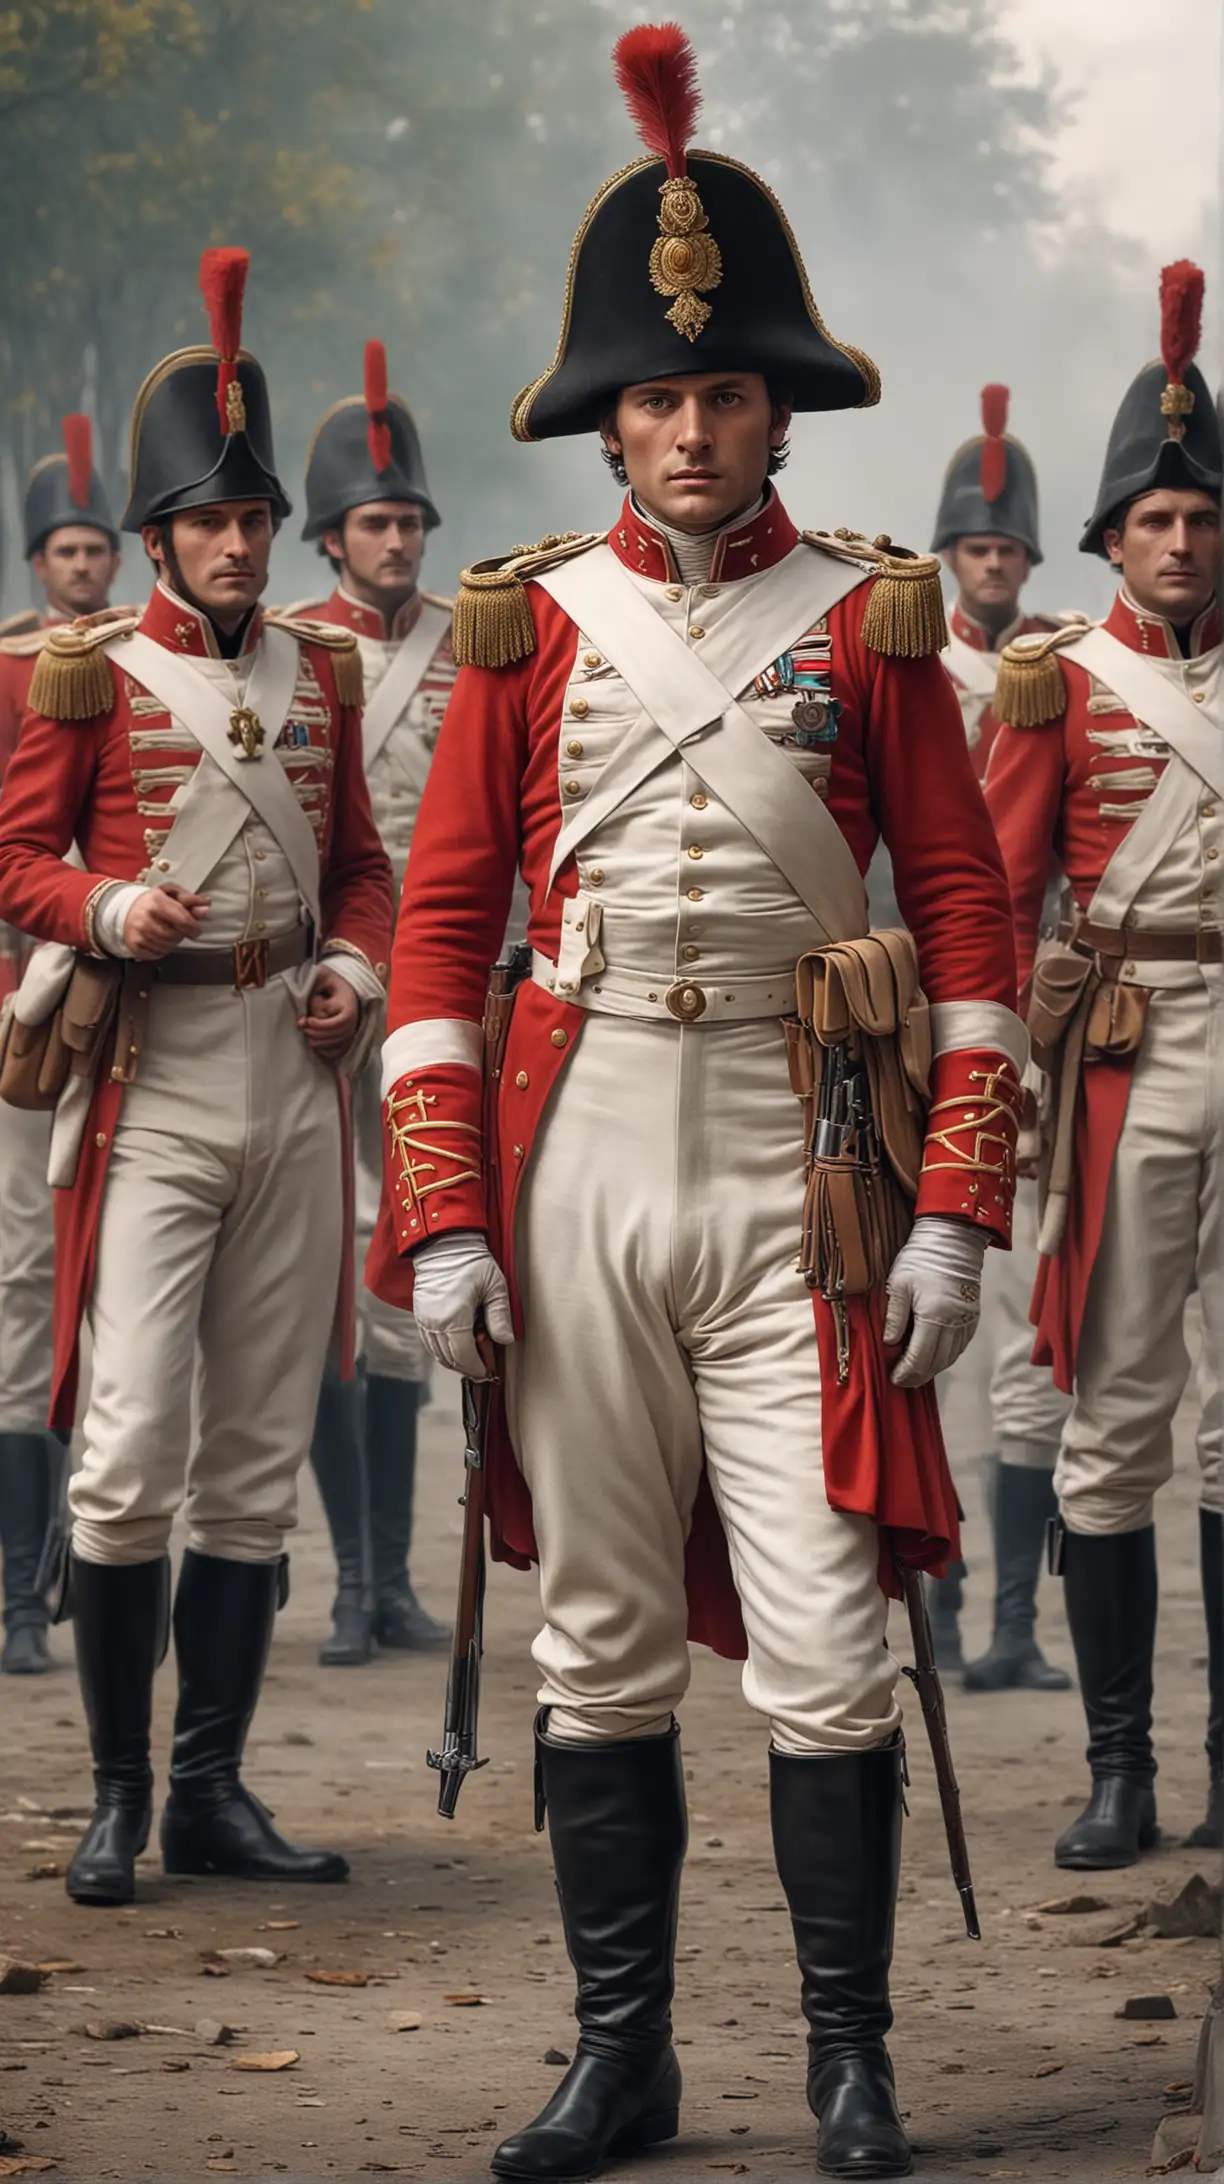 Napoleon Bonaparte Leading Swiss Soldiers in Hyper Realistic Depiction